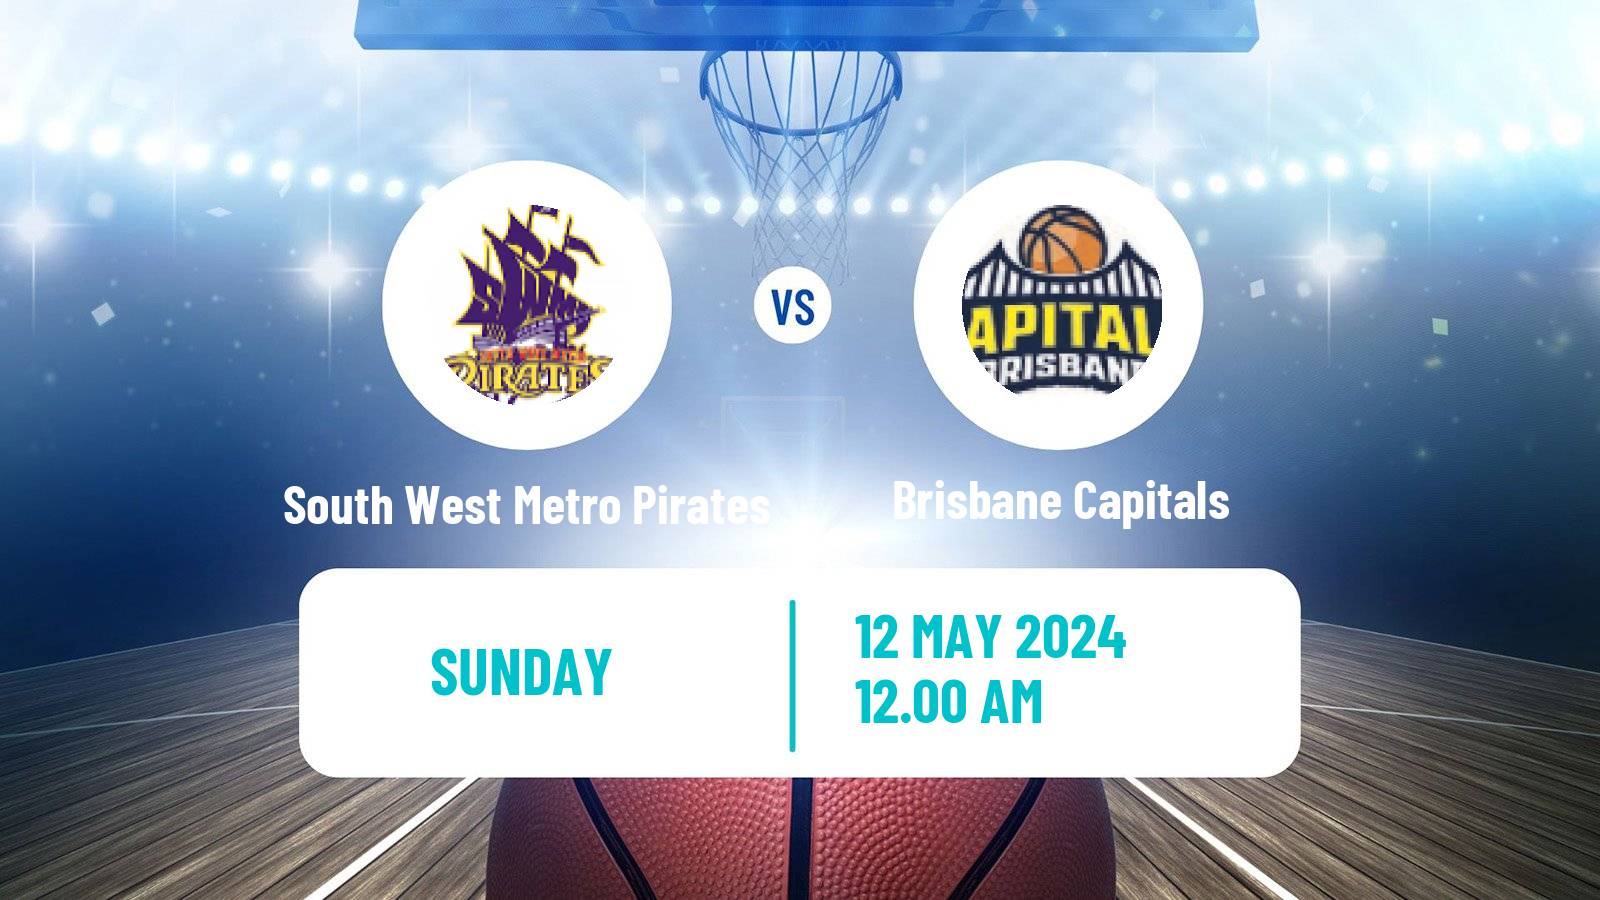 Basketball Australian NBL1 North South West Metro Pirates - Brisbane Capitals